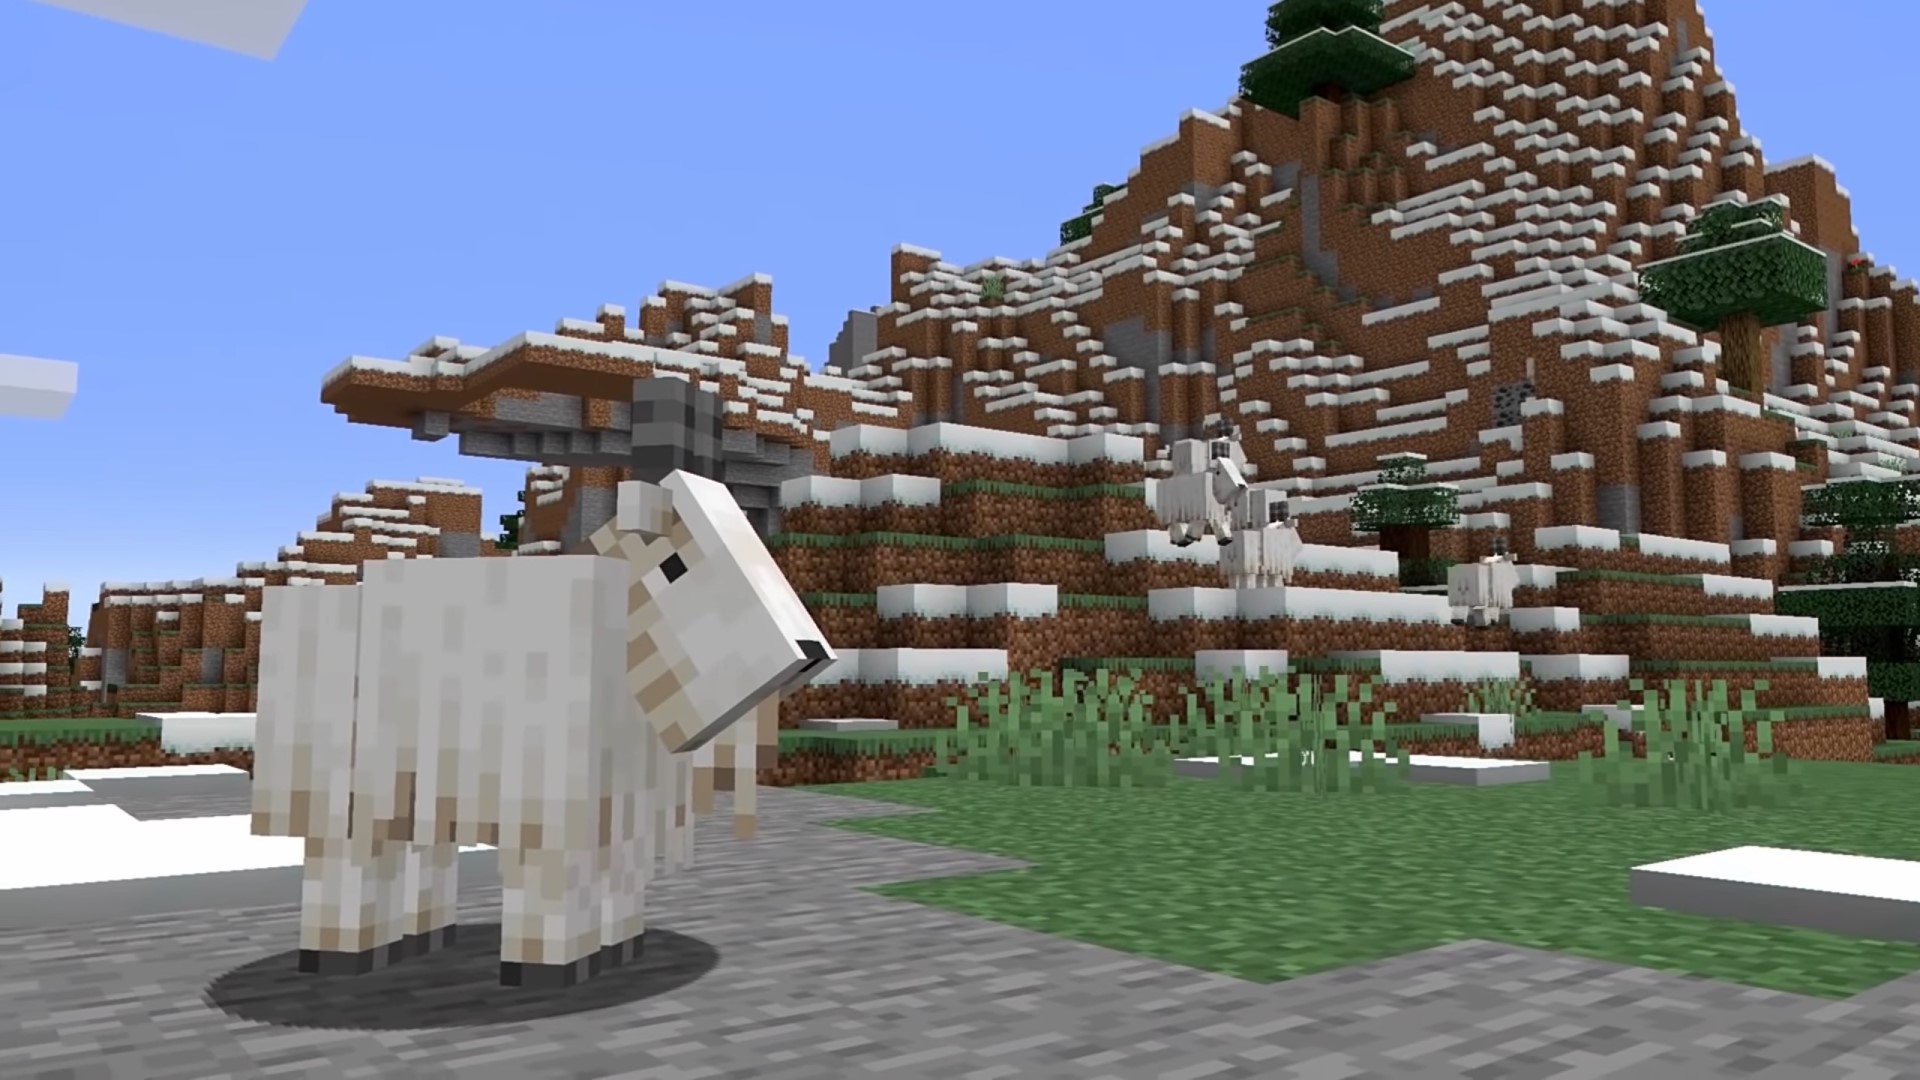 Minecraft’s screaming goats use 50% goat screams, 50% human screams